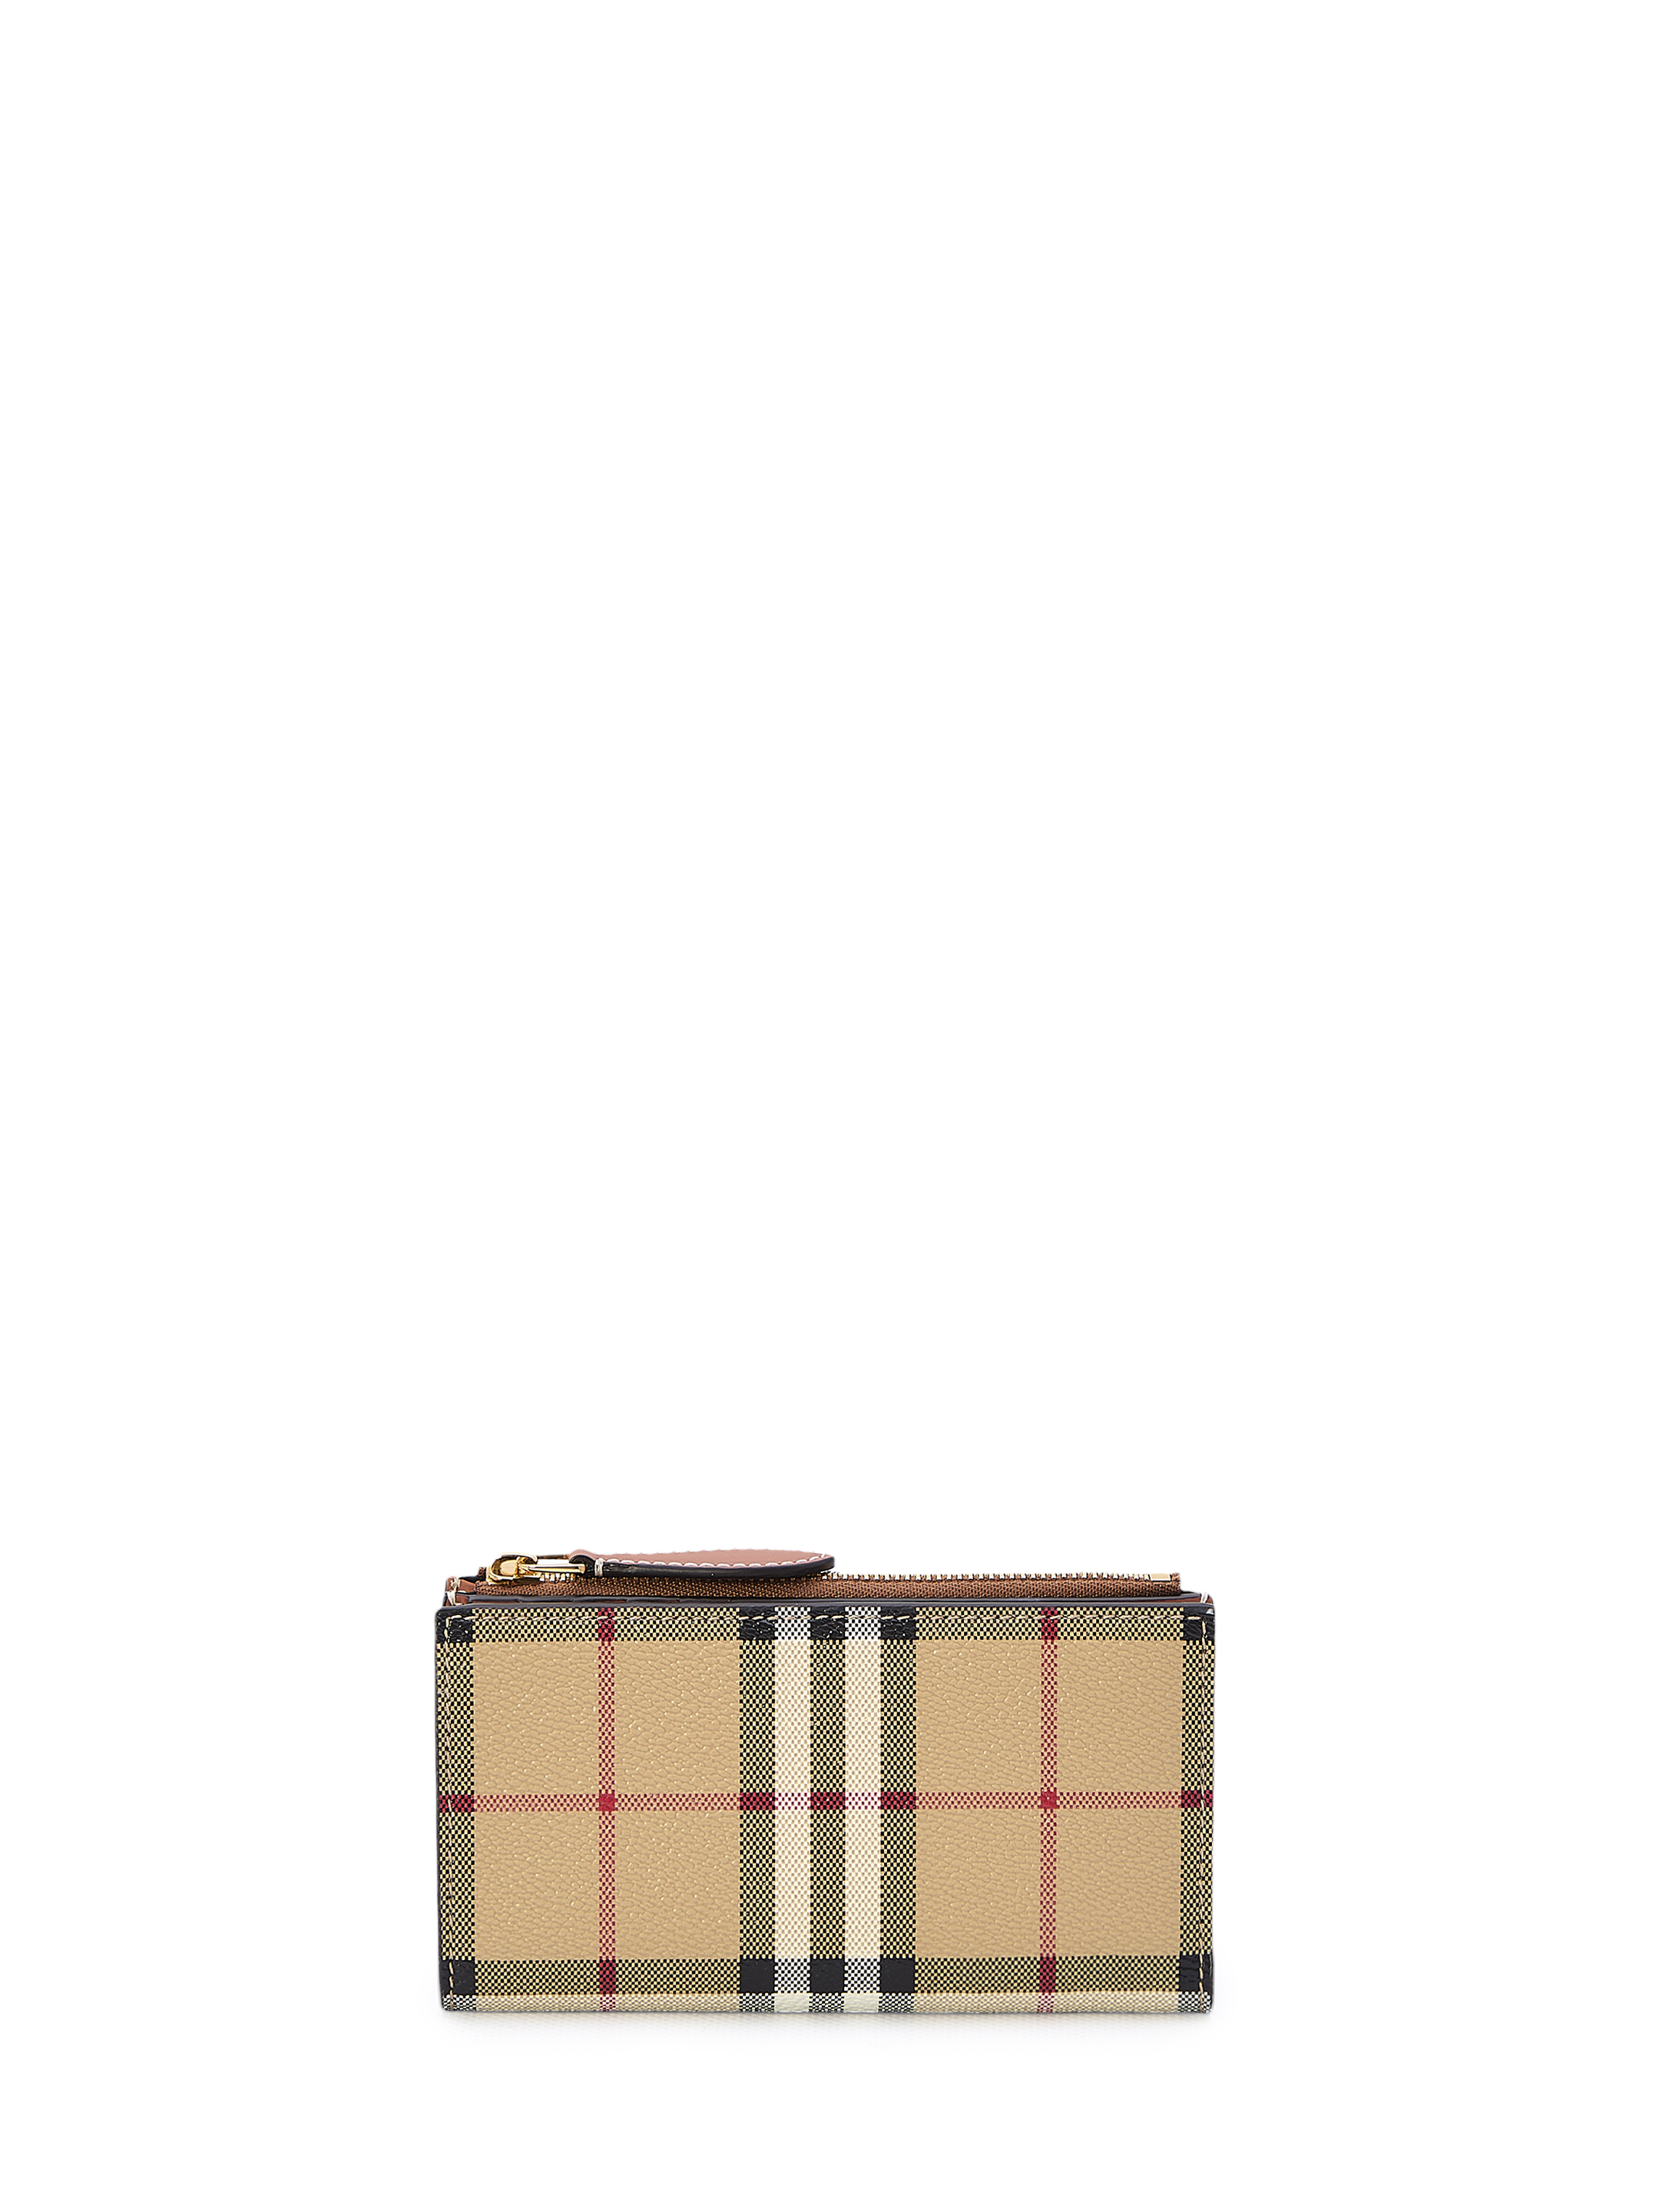 Кошелек Burberry Check Medium Bi-fold, бежевый кошелек burberry check бежевый